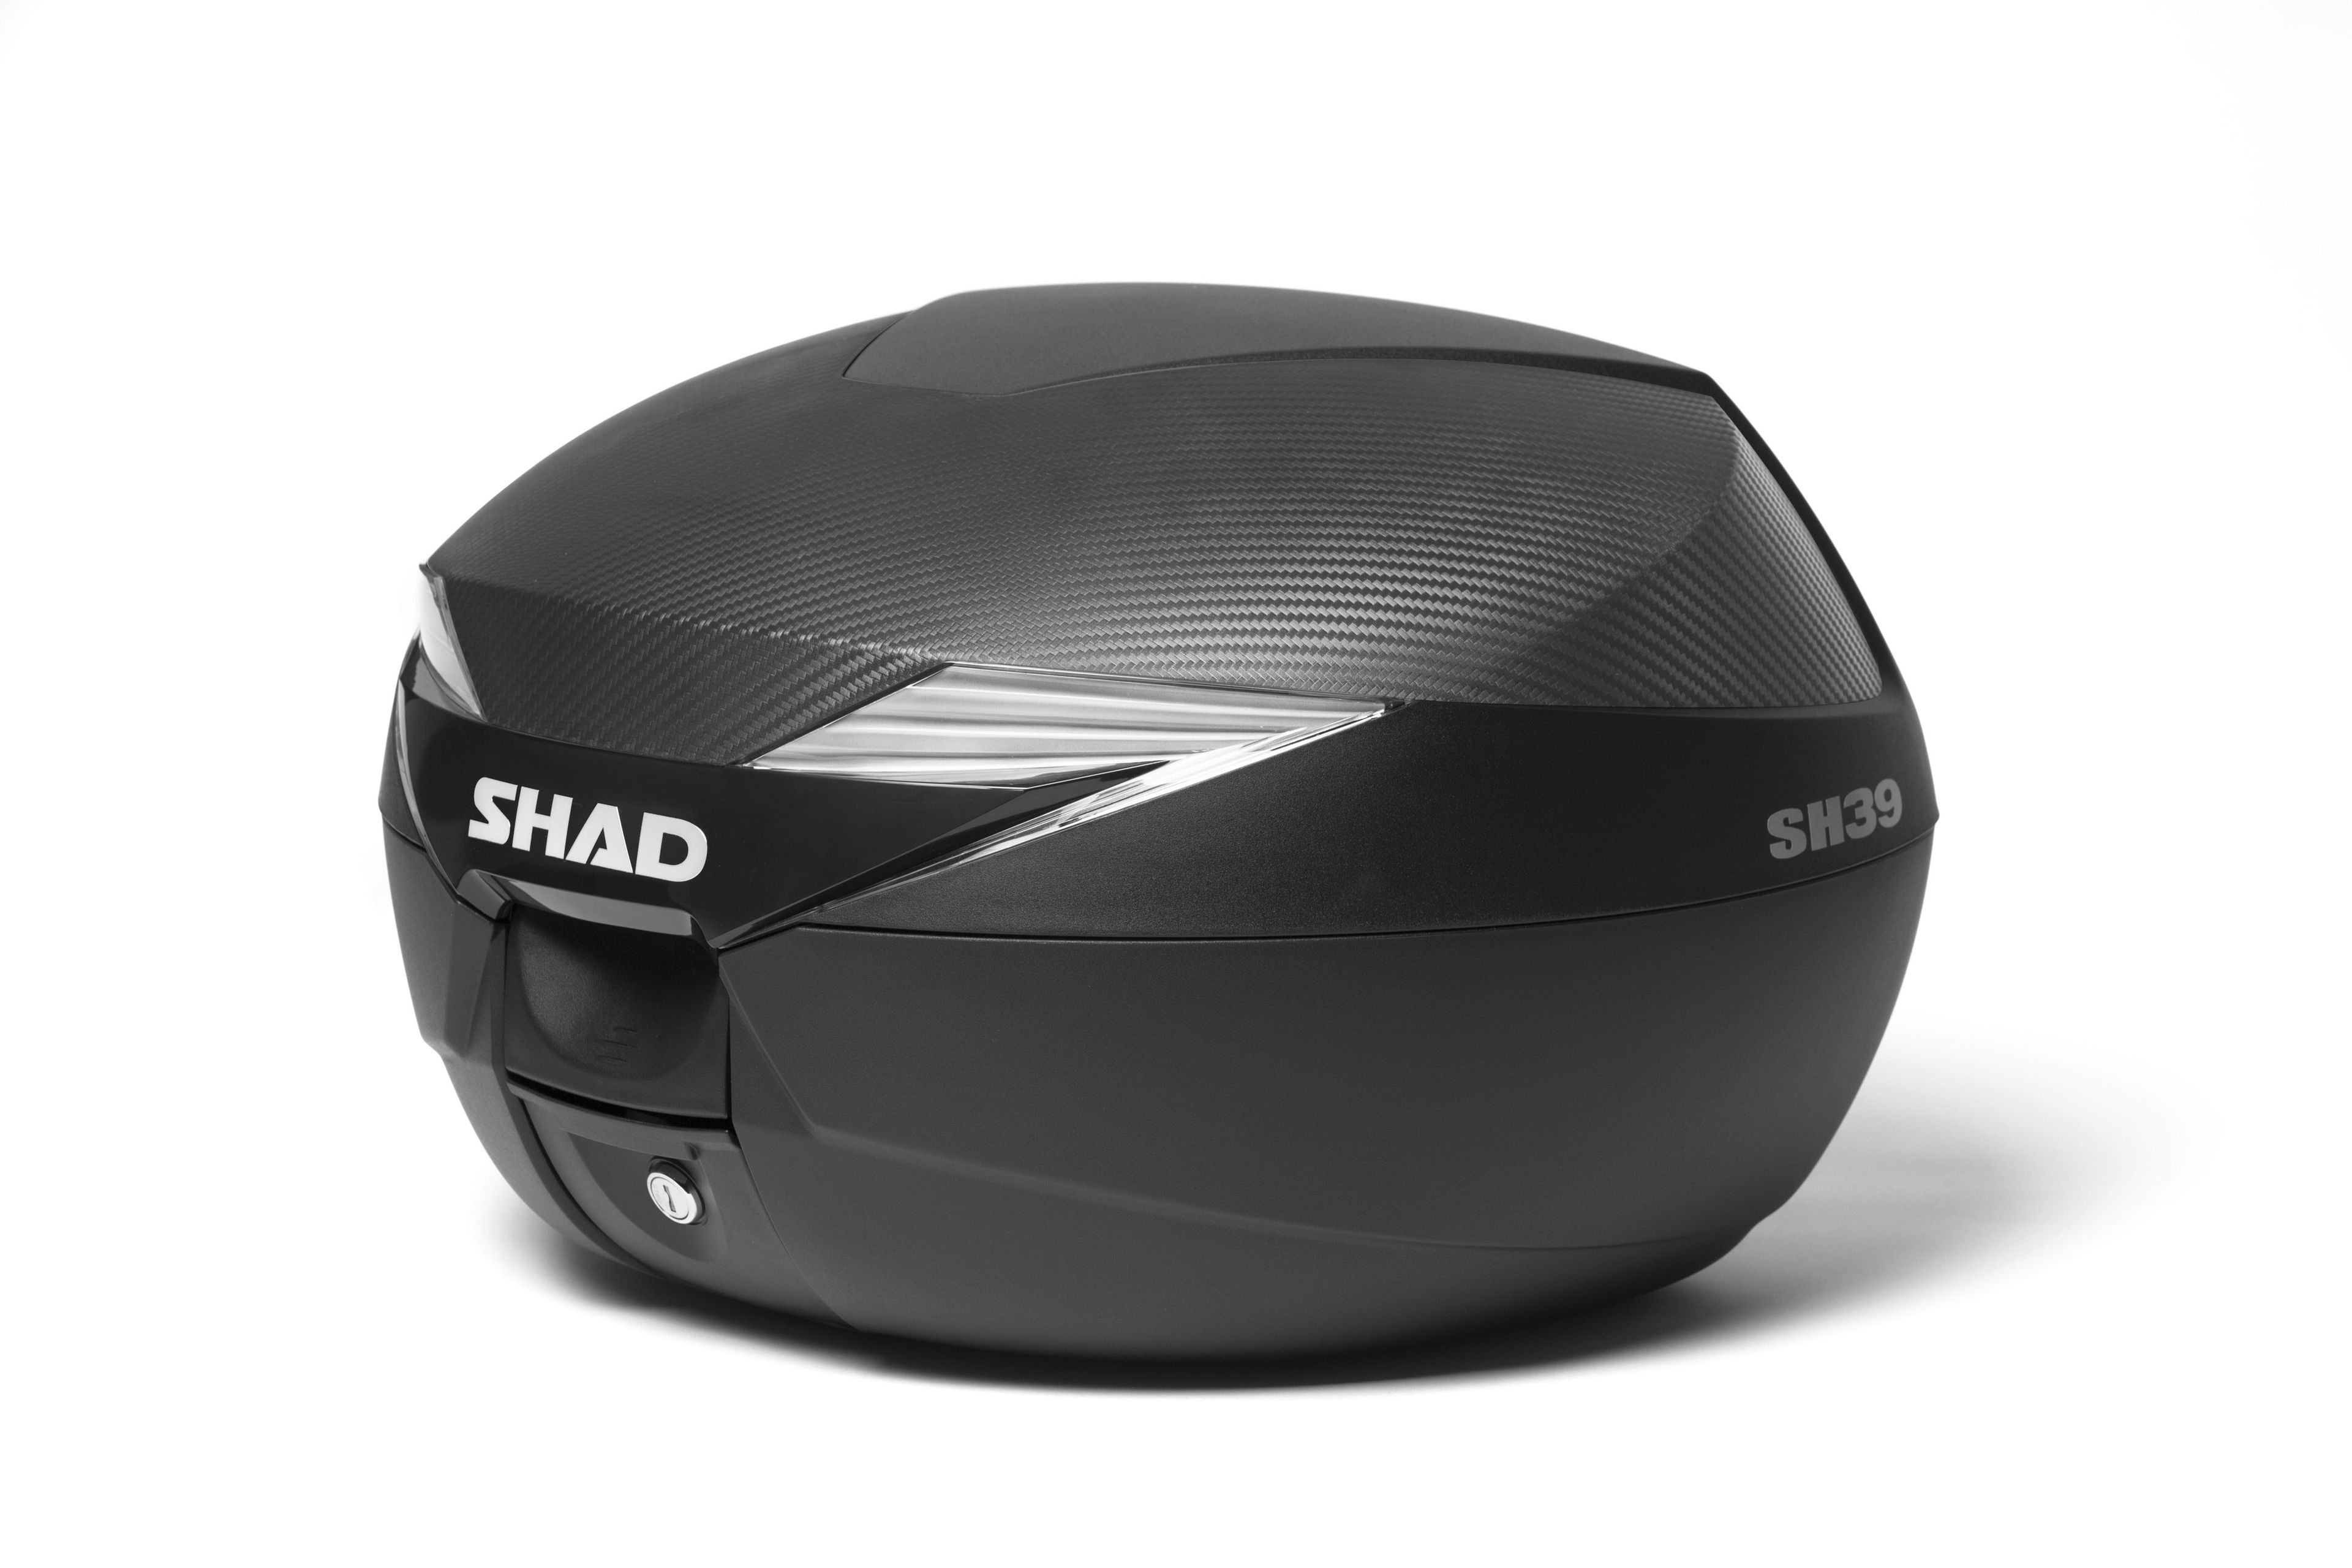 Shad-SH39-maleta trasera